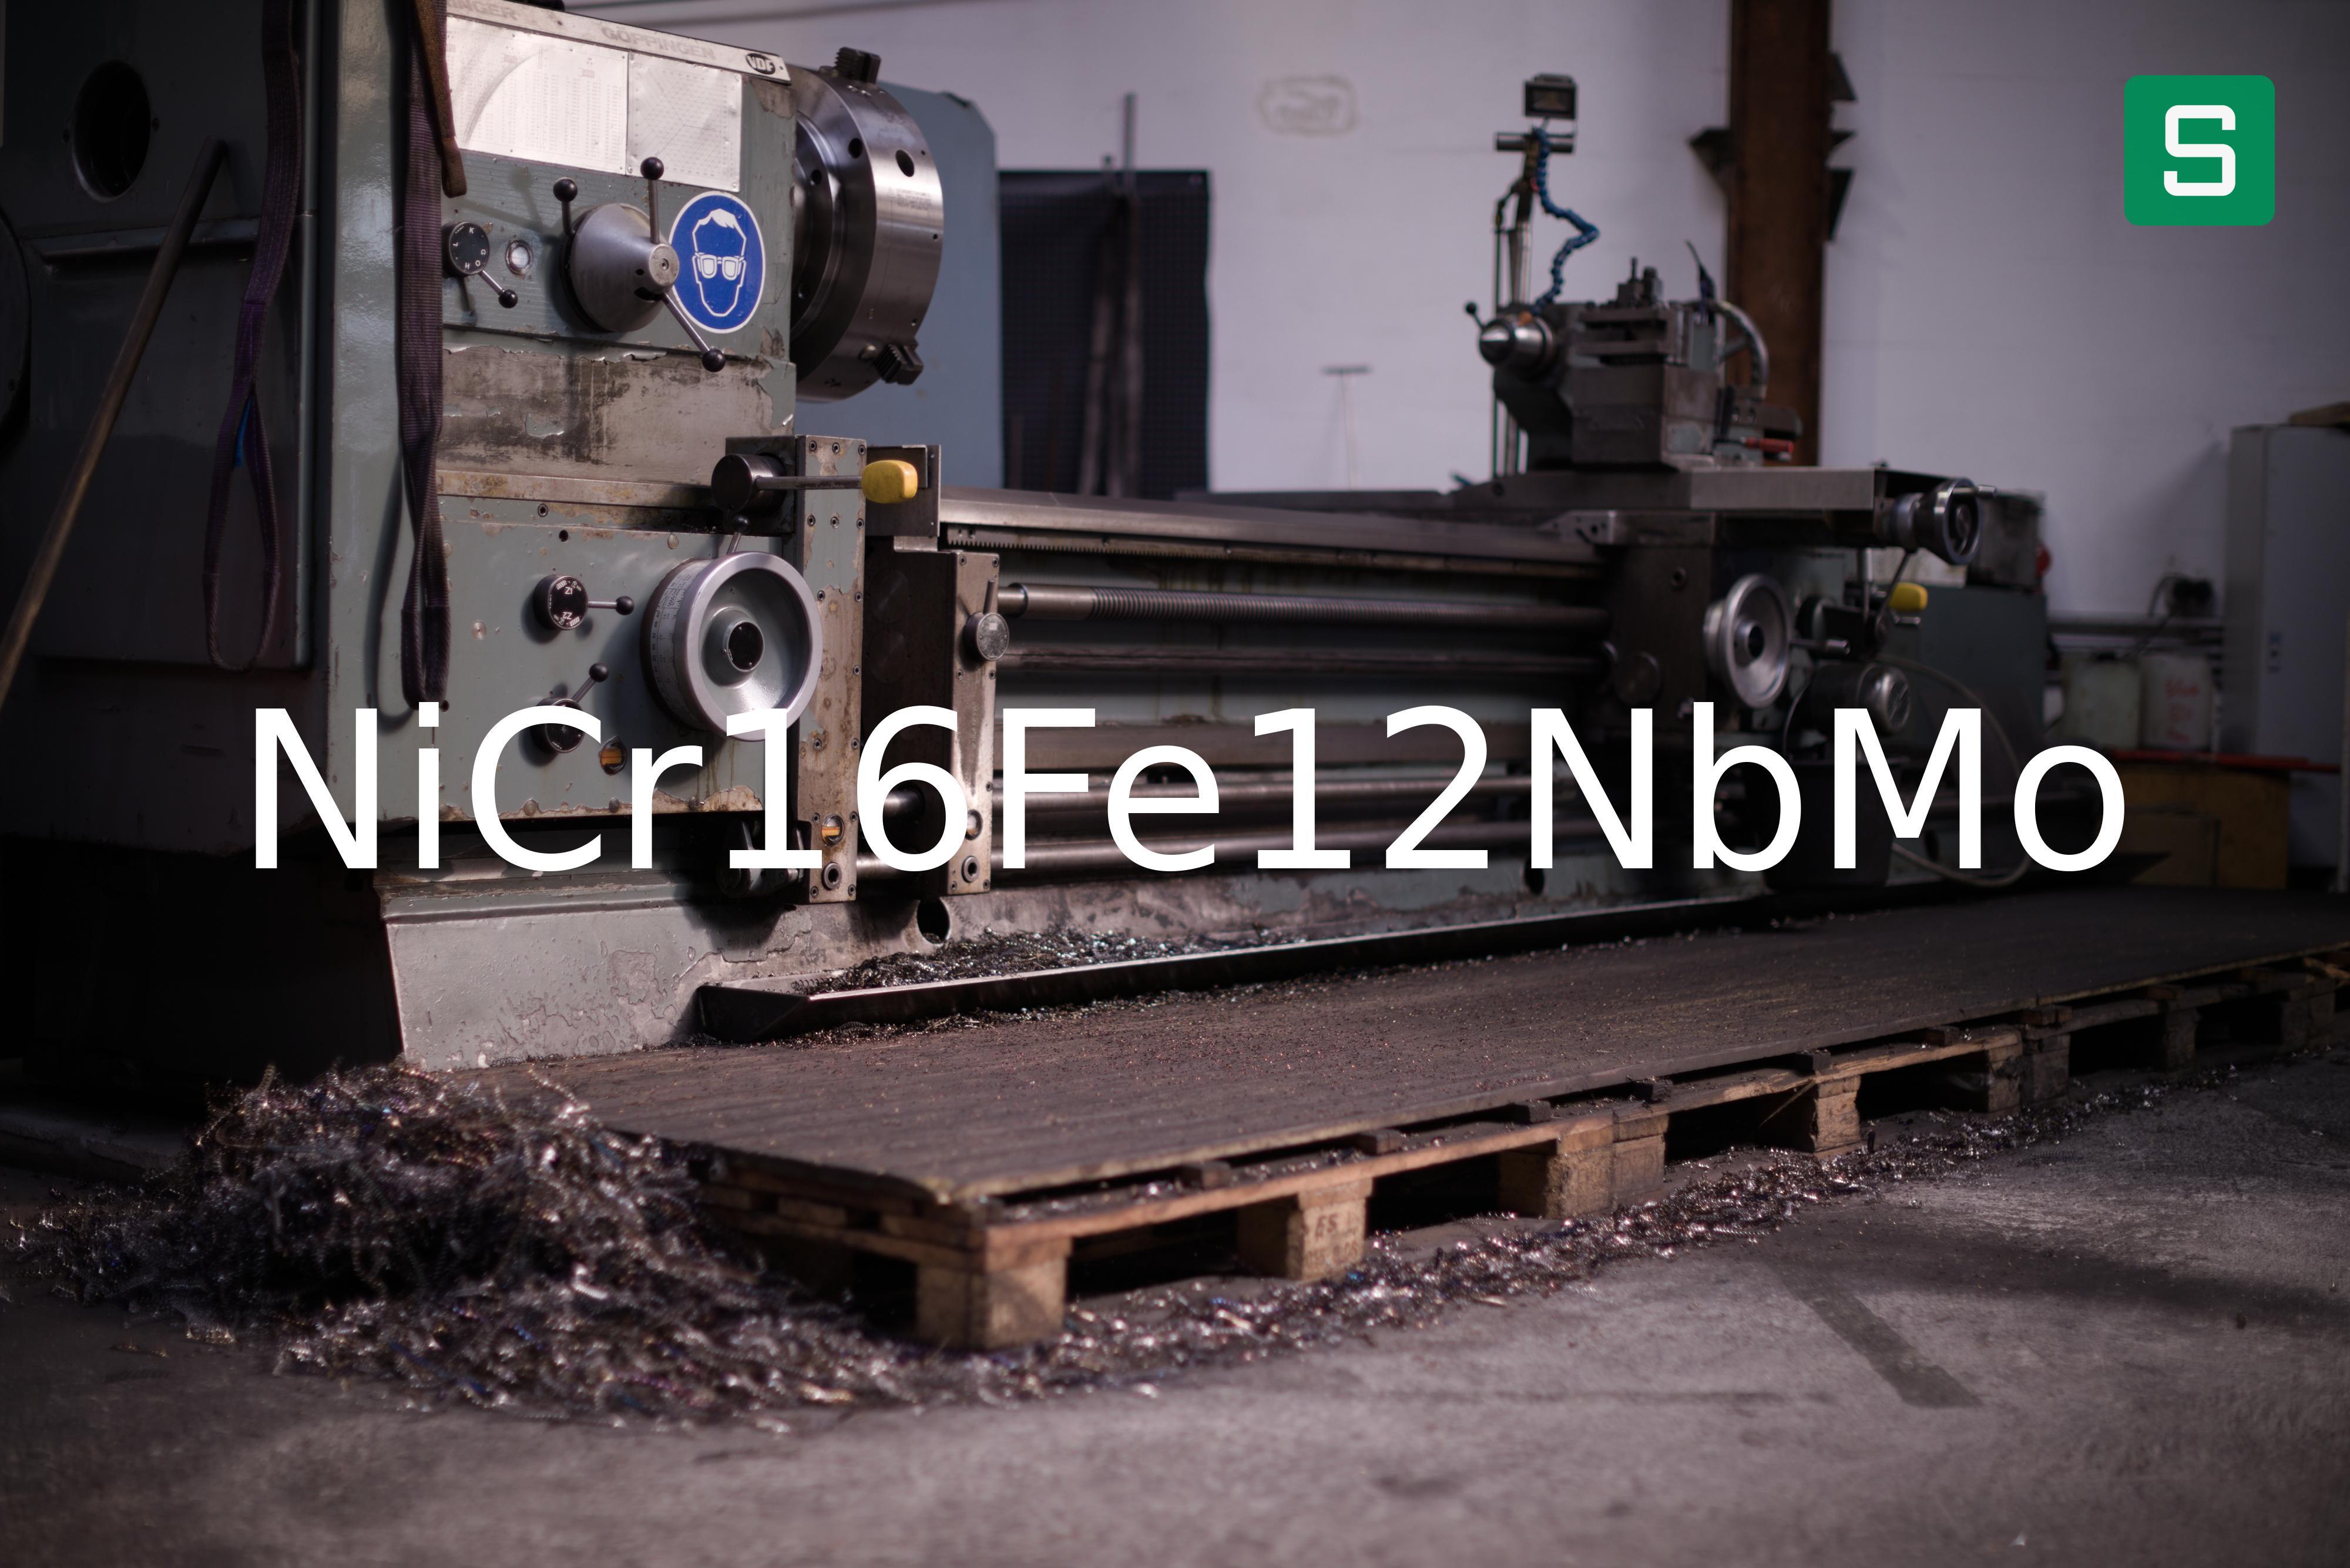 Steel Material: NiCr16Fe12NbMo